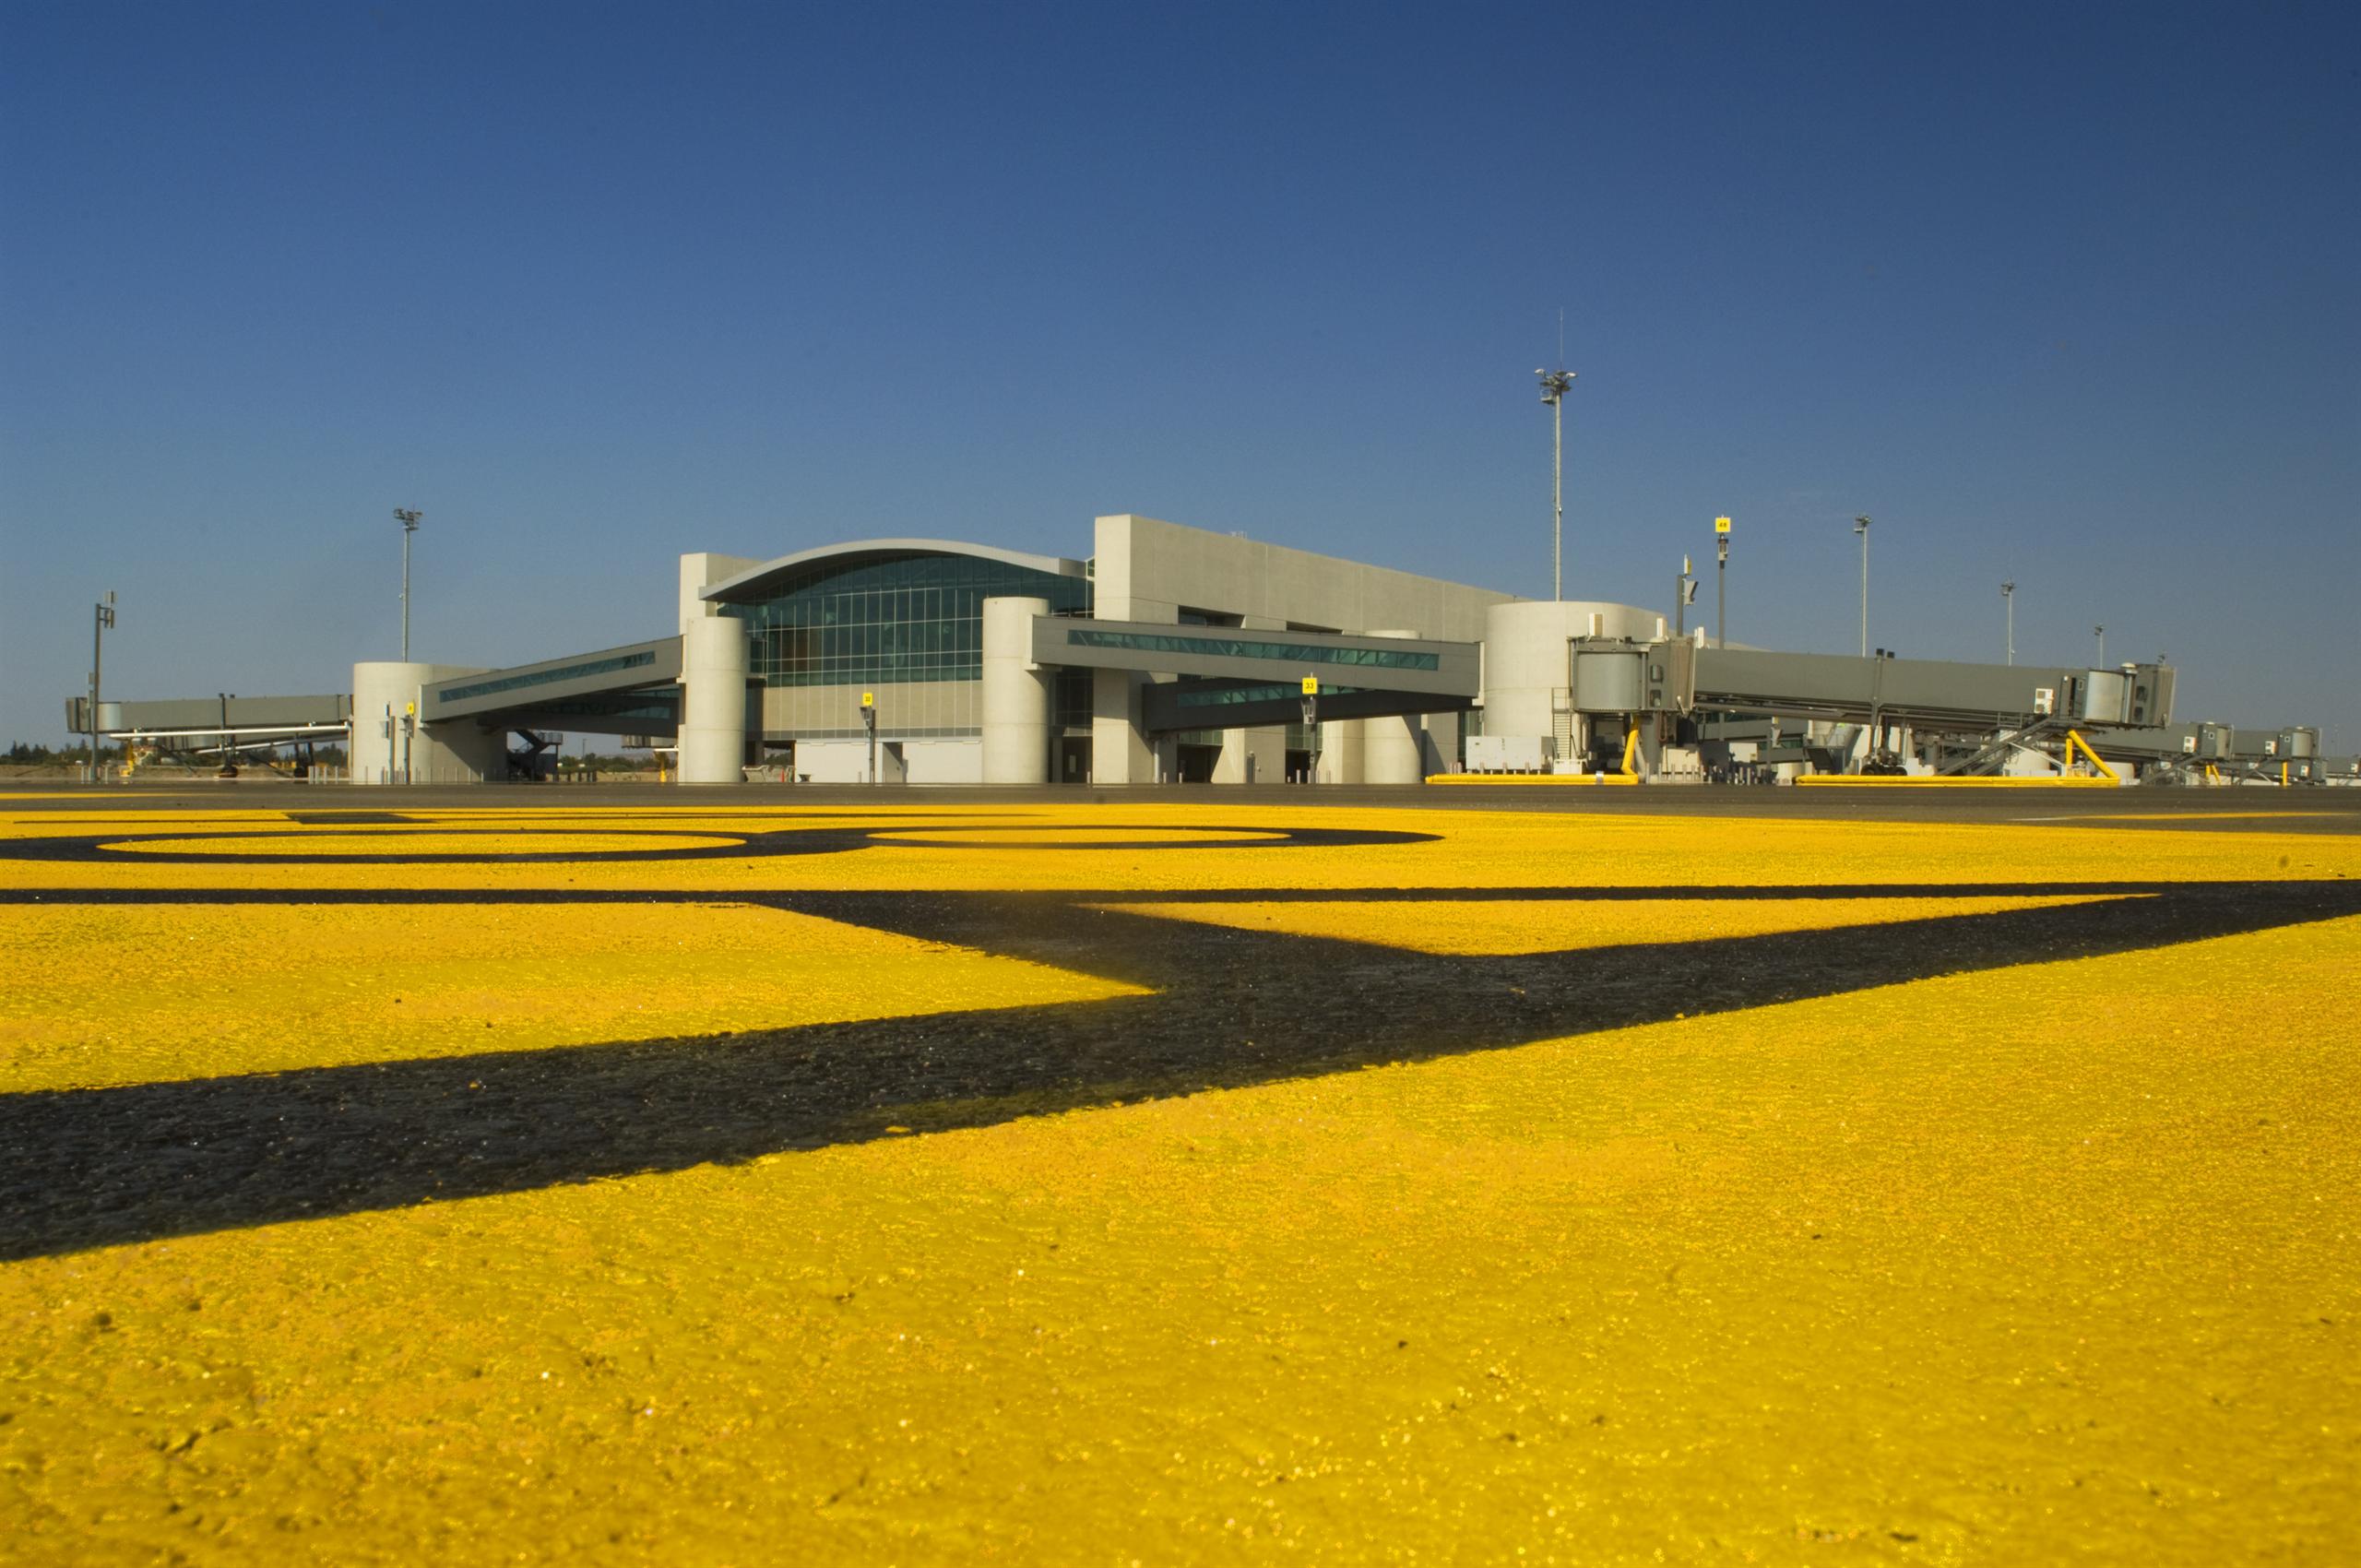 Terminal and runway